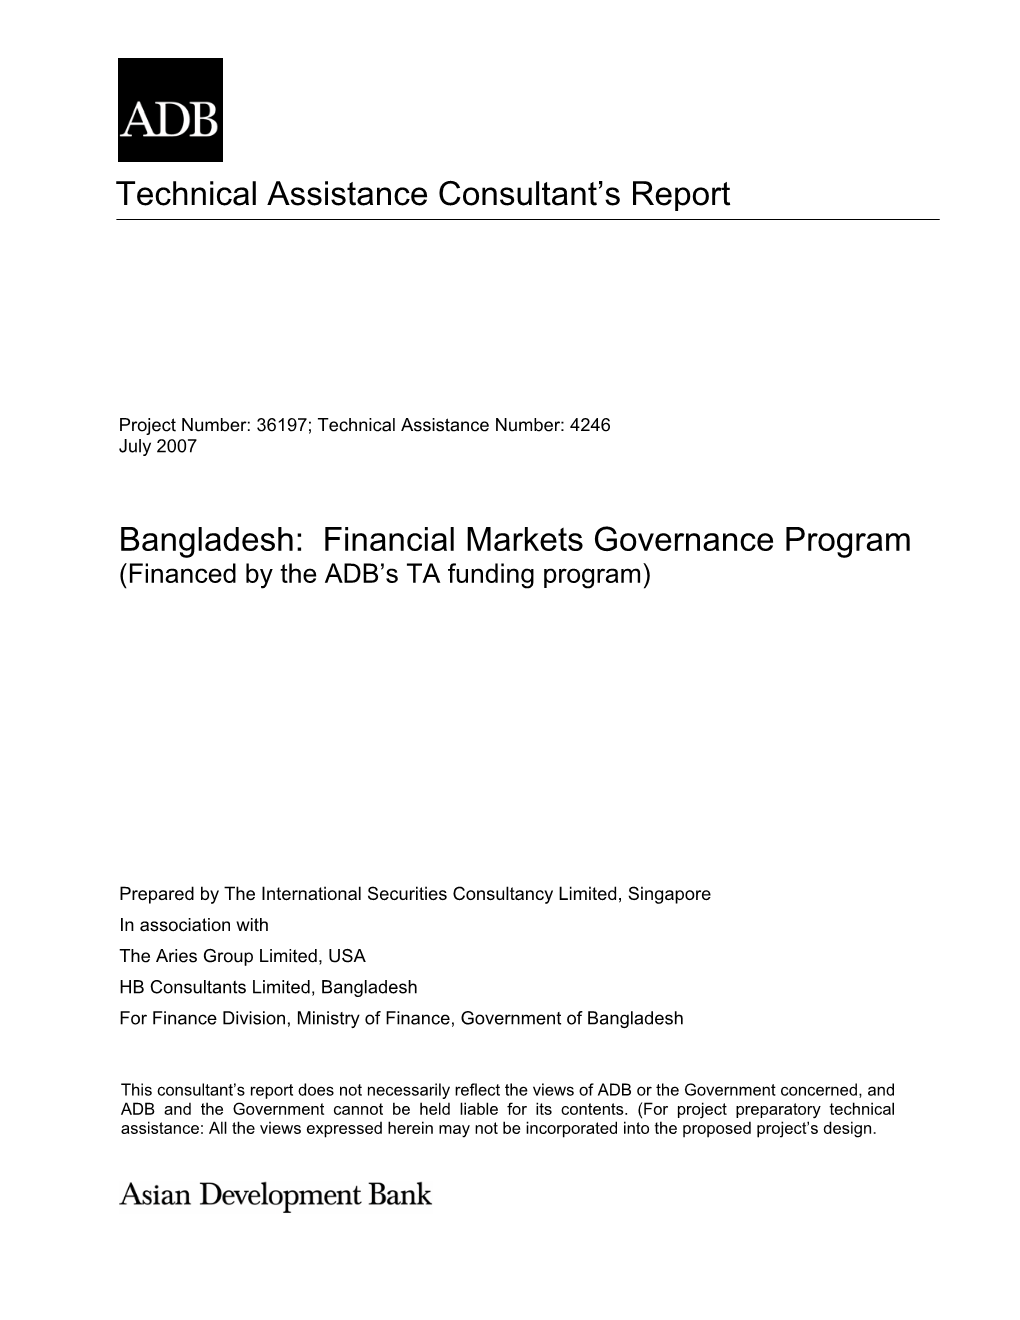 Financial Markets Governance Program (Financed by the ADB’S TA Funding Program)